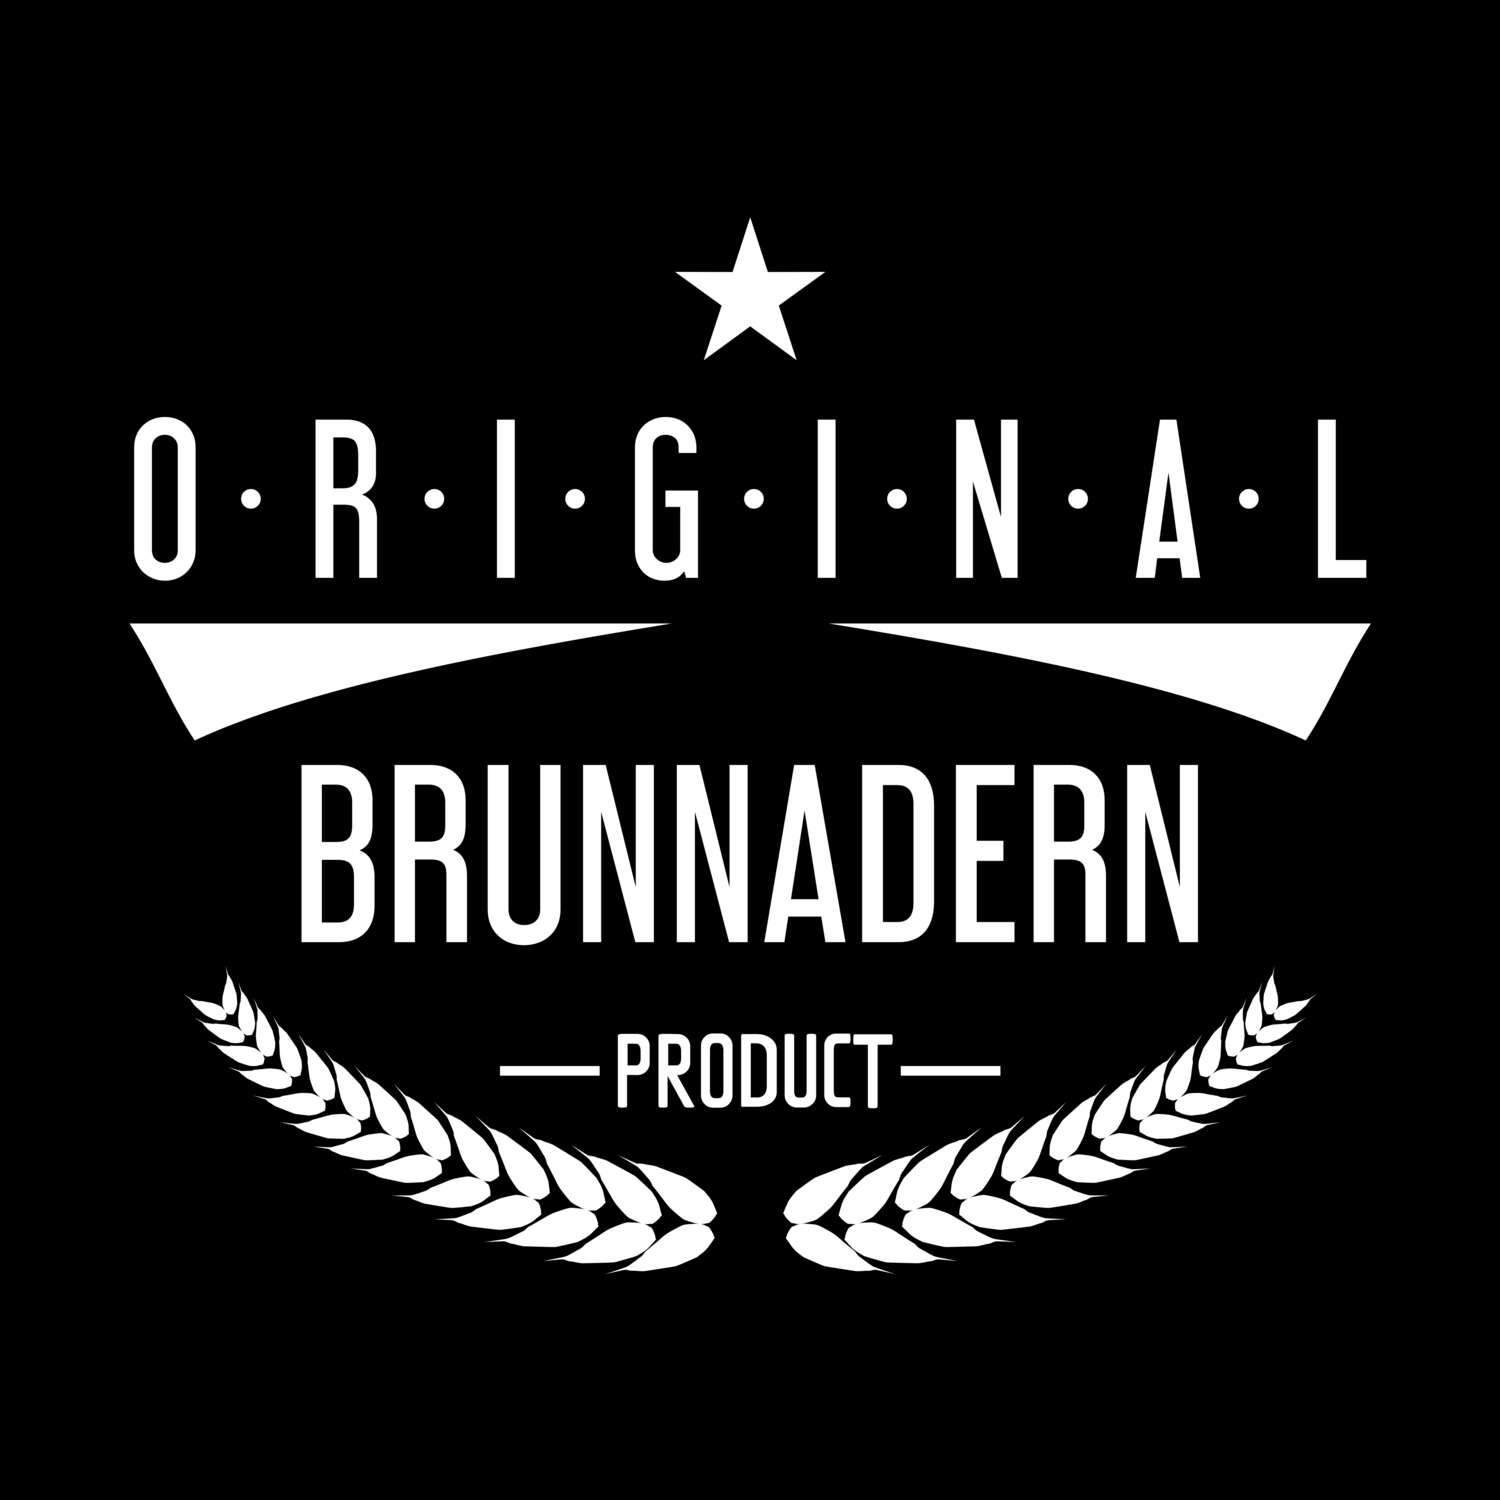 Brunnadern T-Shirt »Original Product«